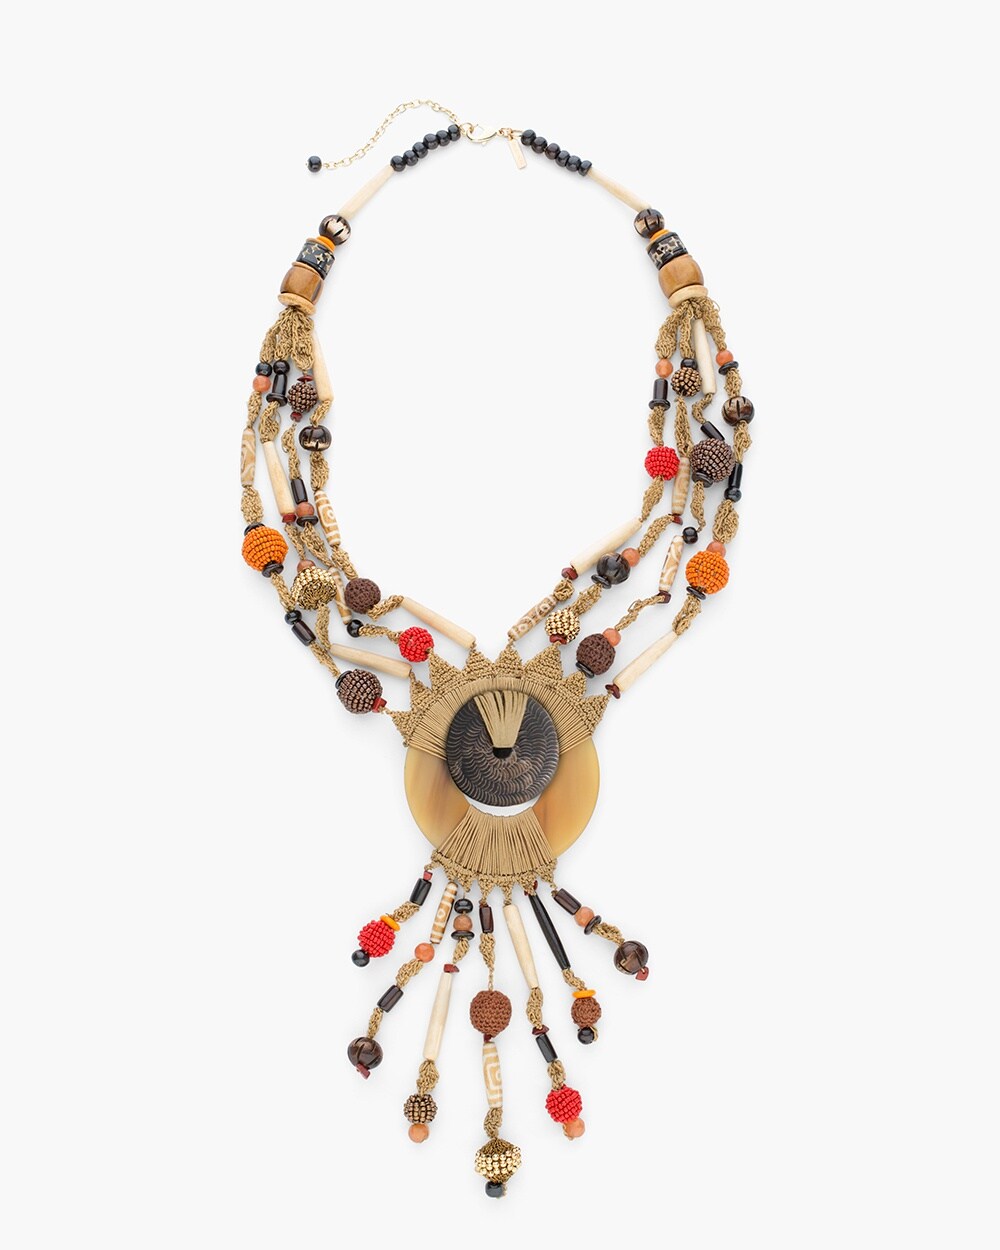 The Collectibles Amara Necklace